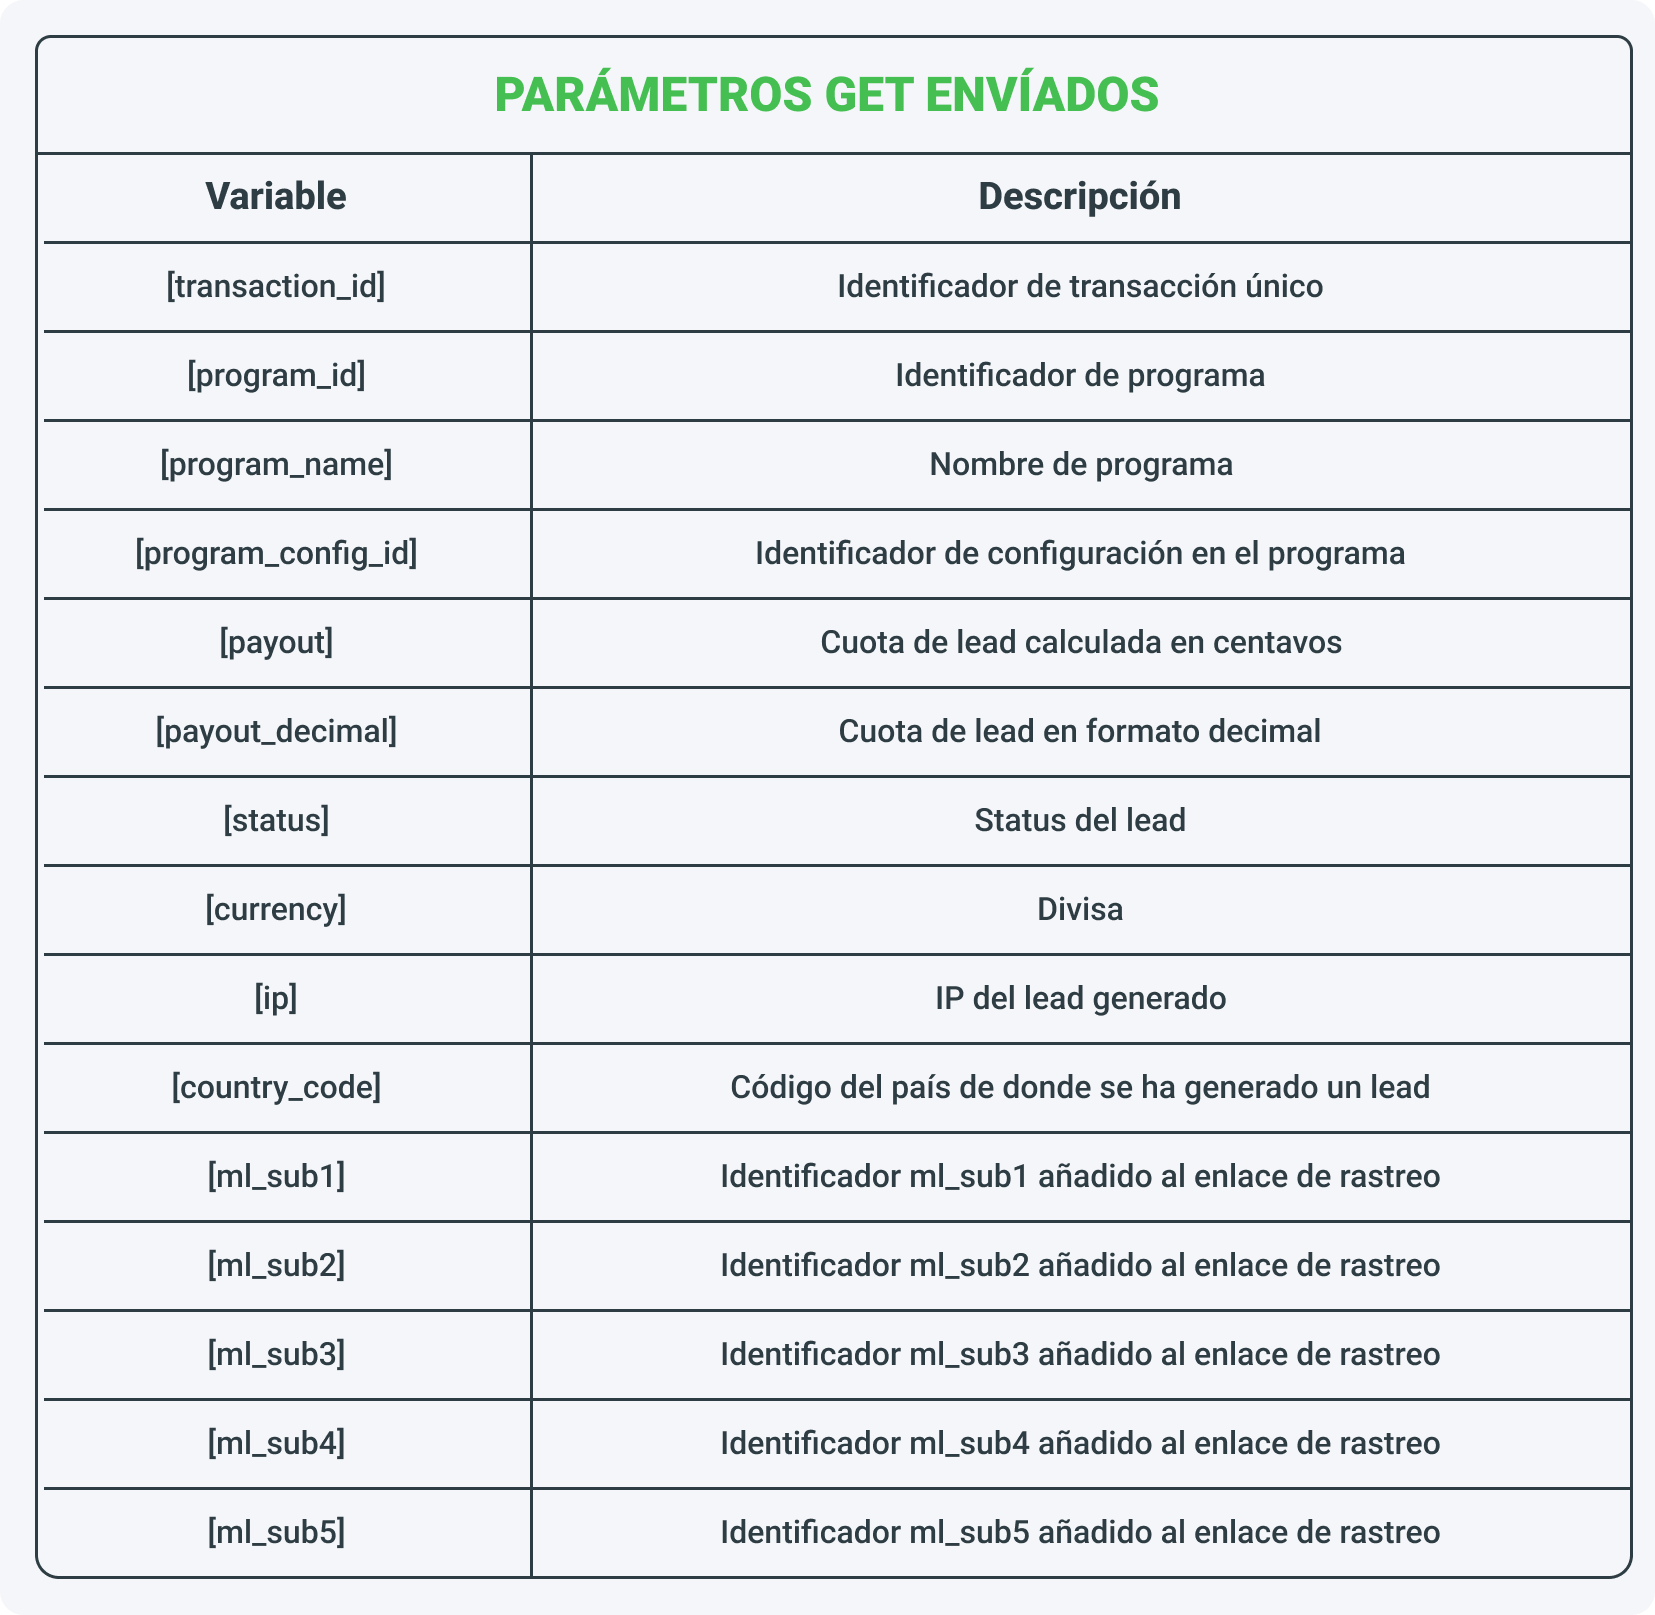 Variables postback API disponibles en los parámetros GET